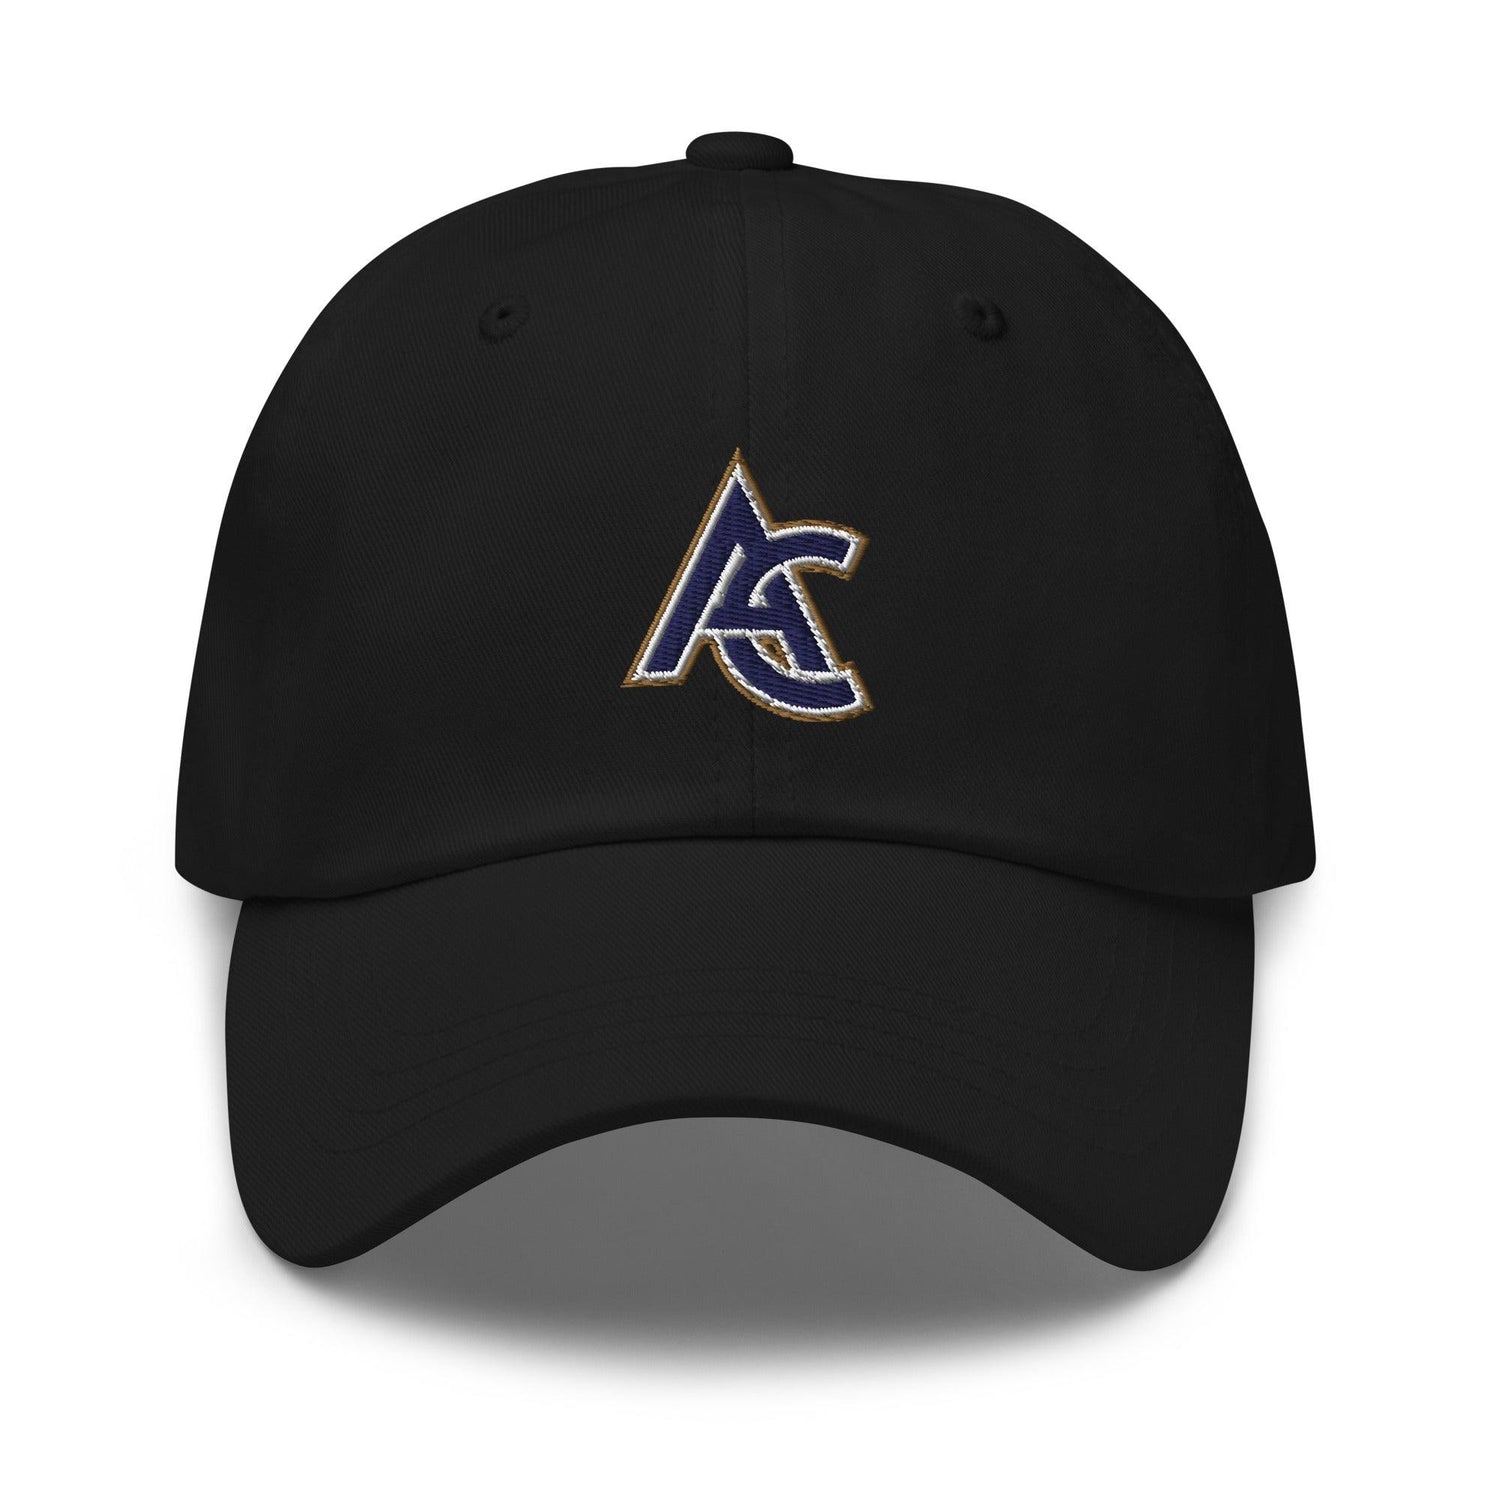 Austin Cox "Elite" hat - Fan Arch